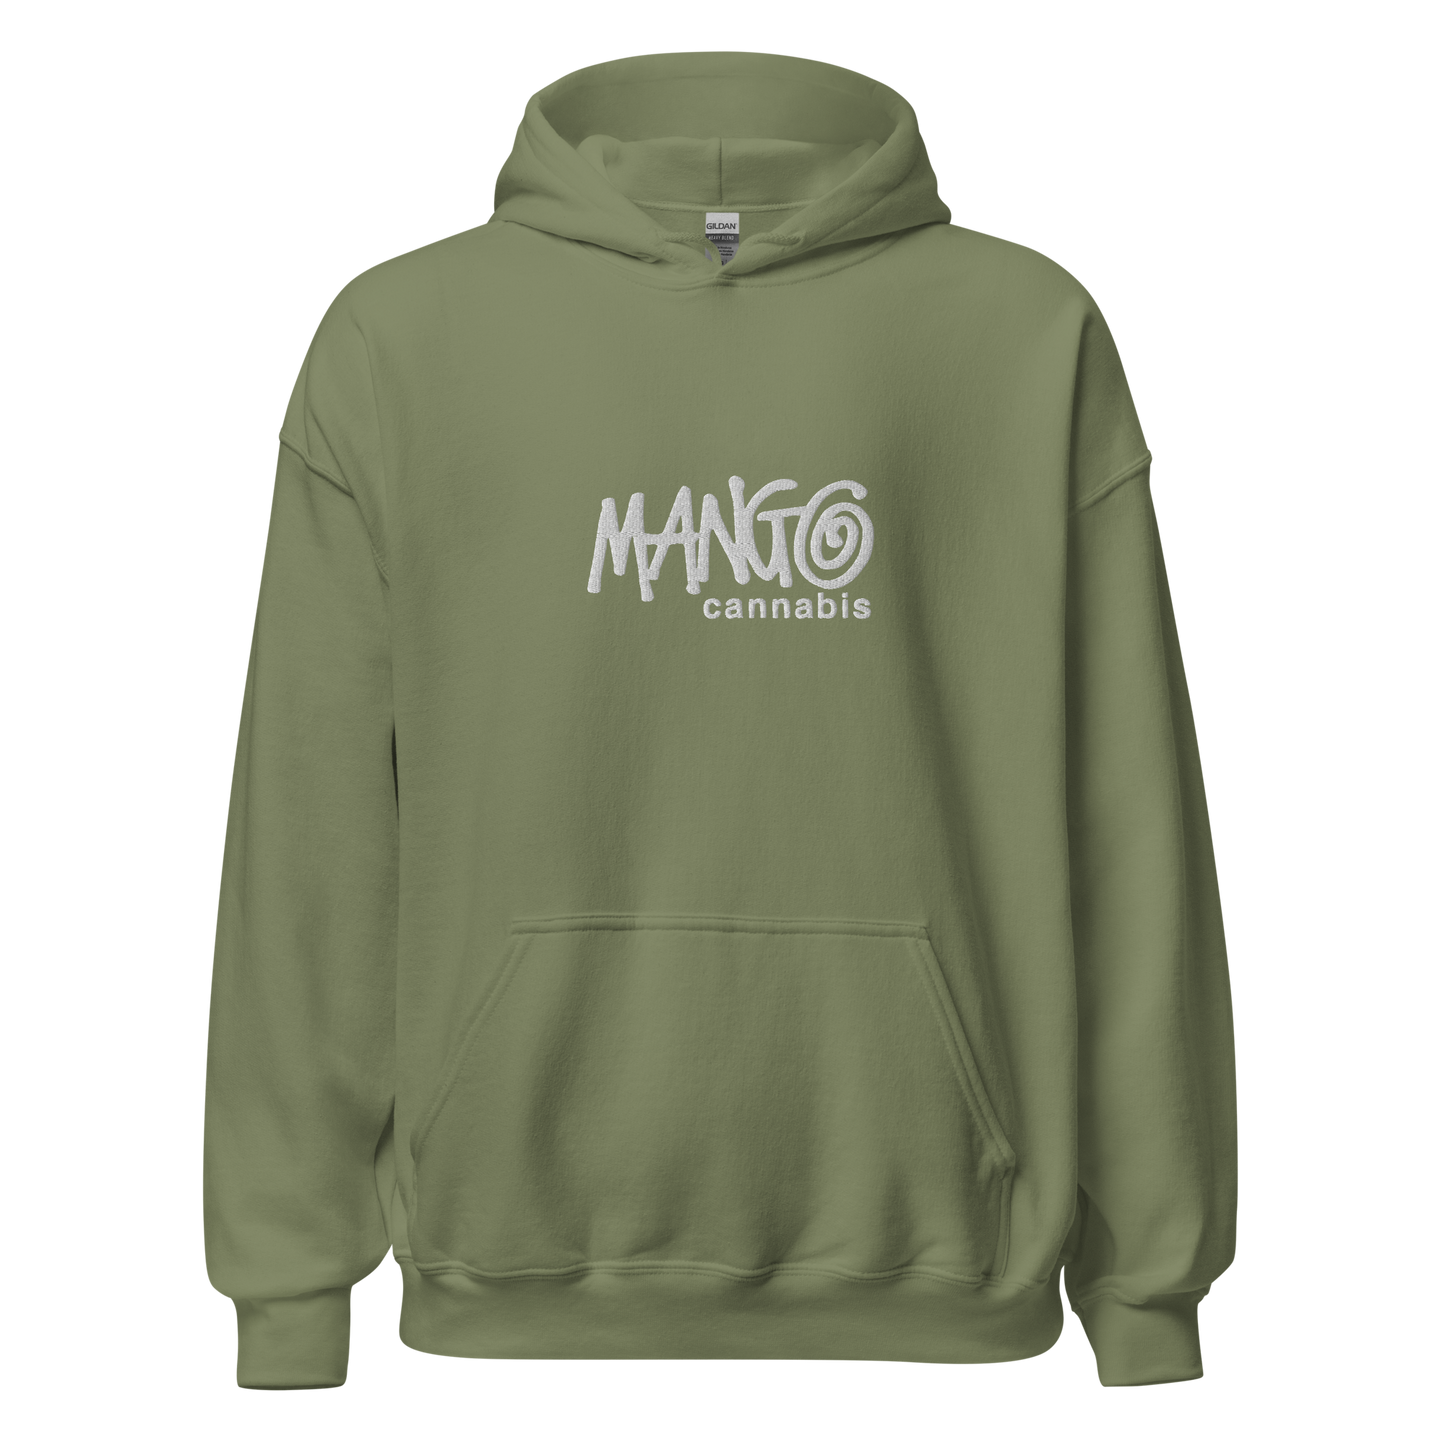 80s/90s Inspired Mango Cannabis Hoodie